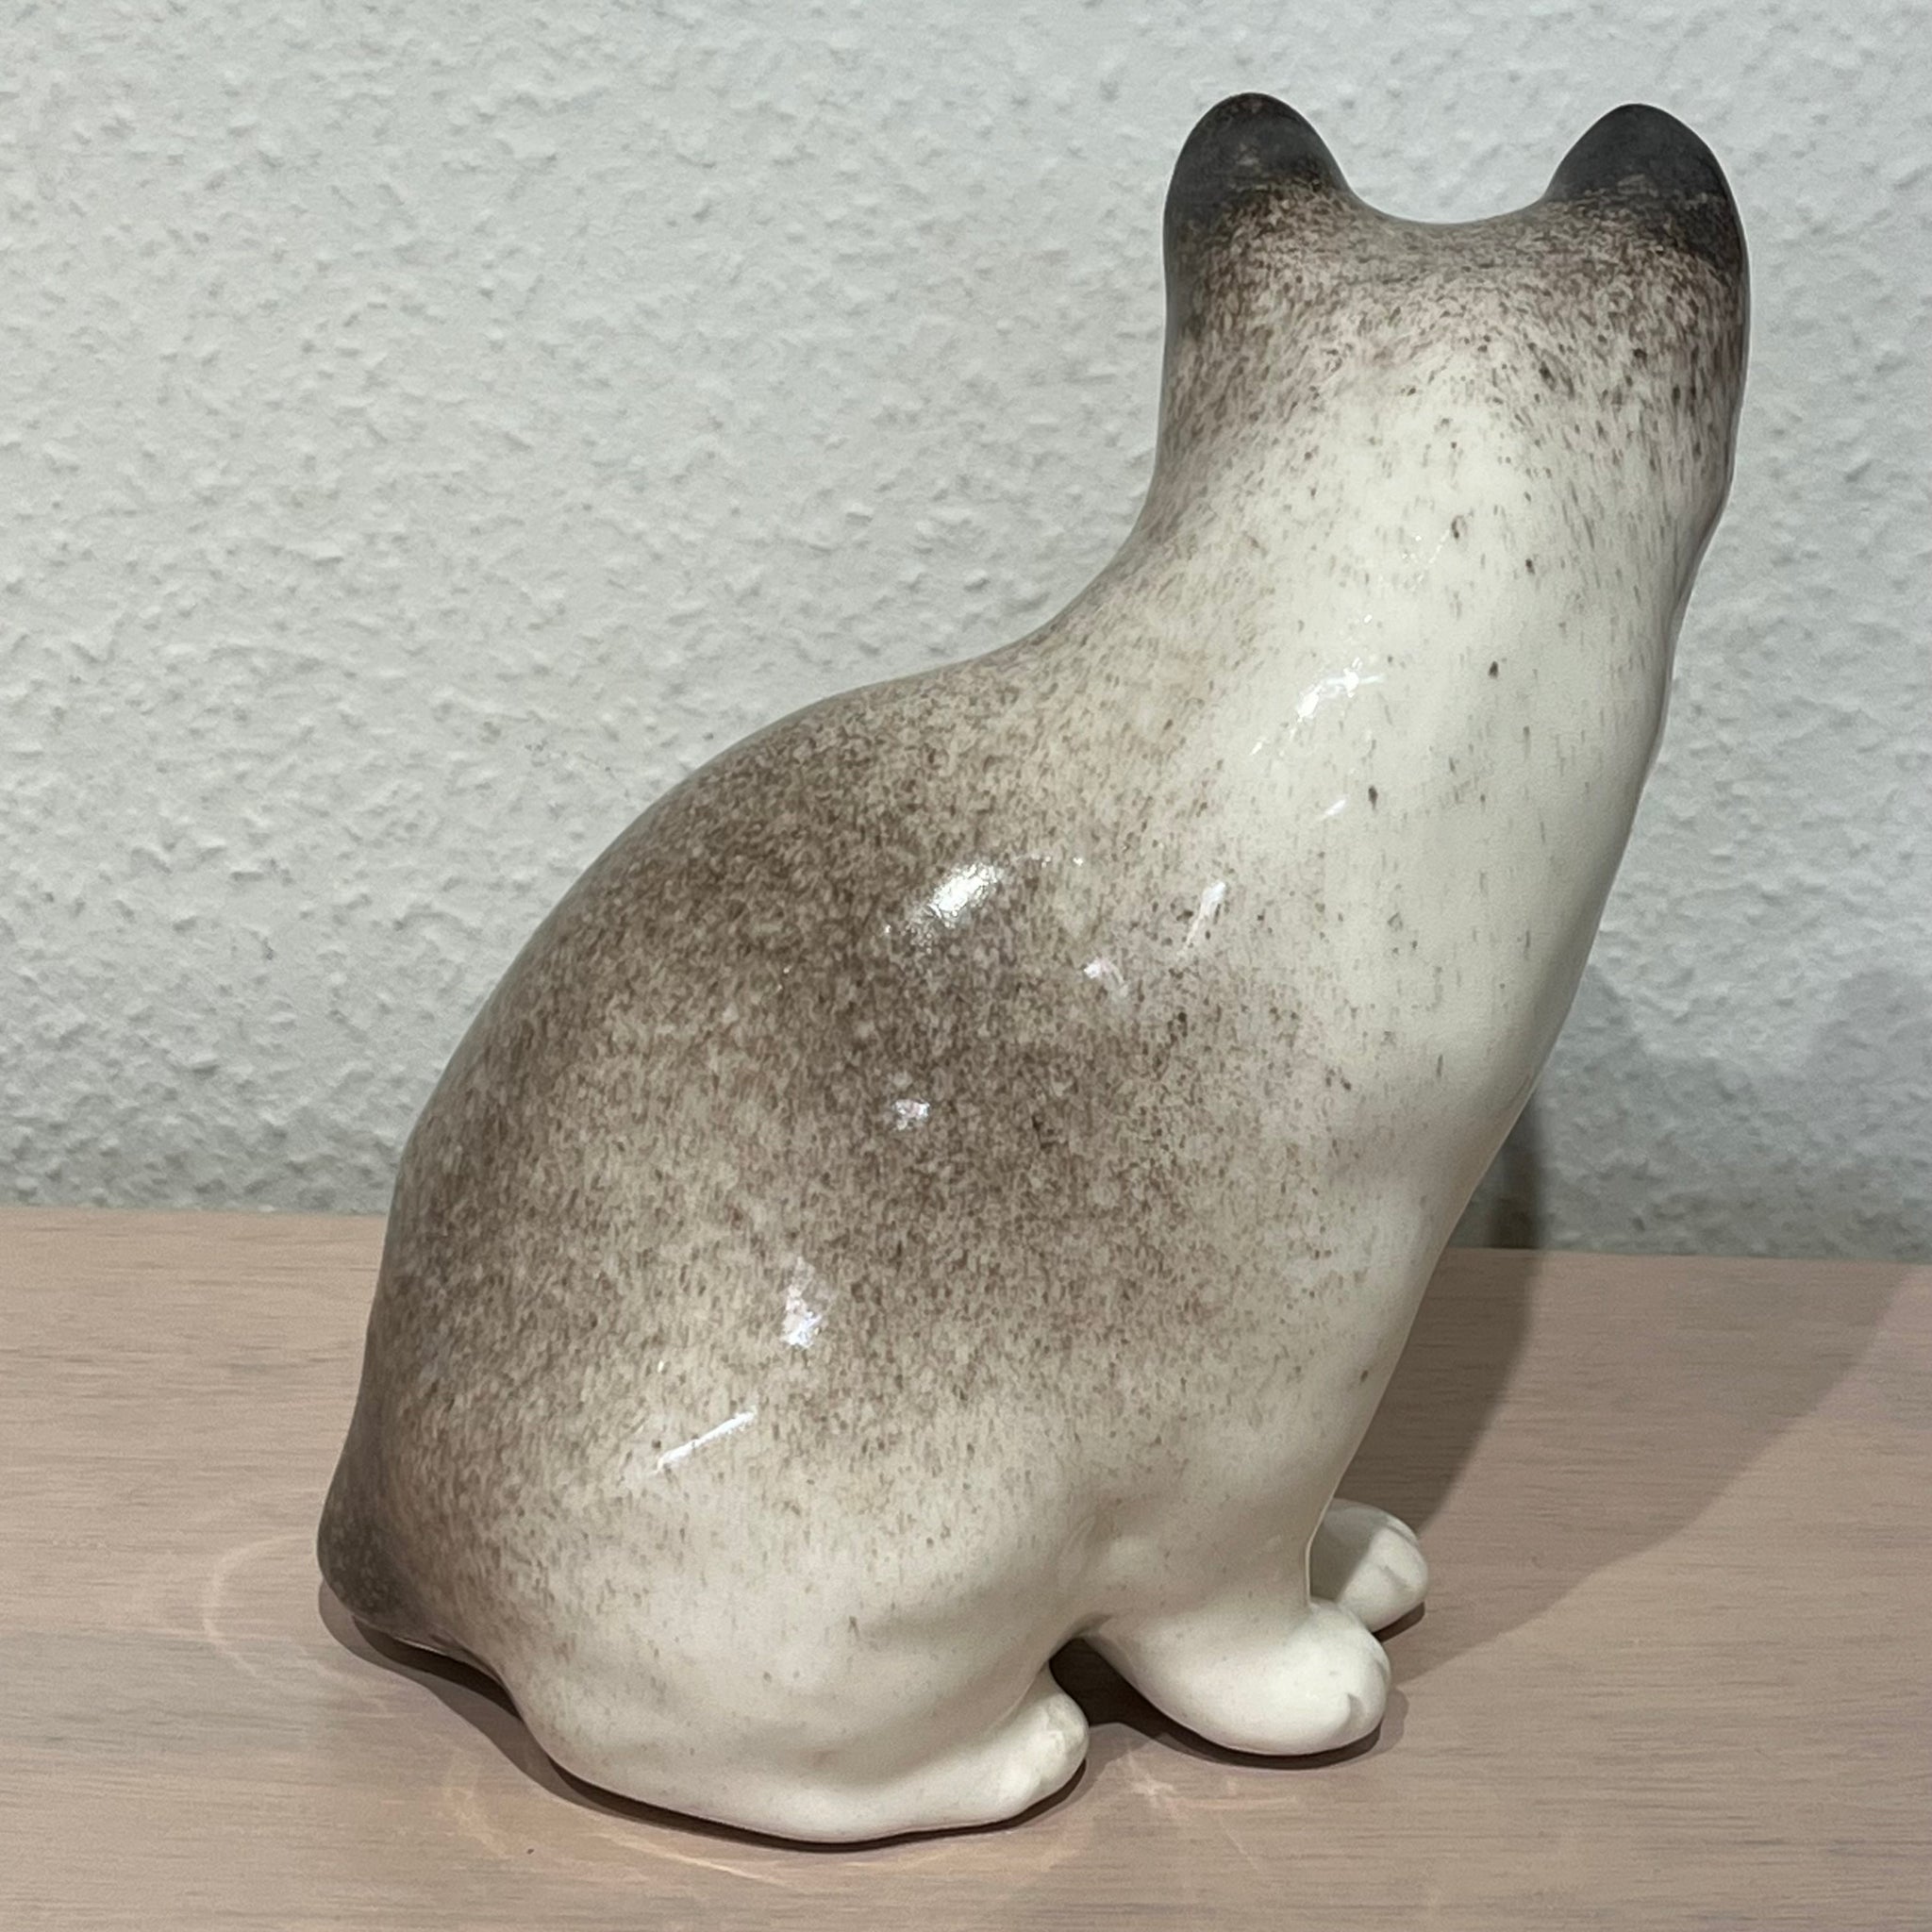 Siamese Winstanley Cat - Size 3